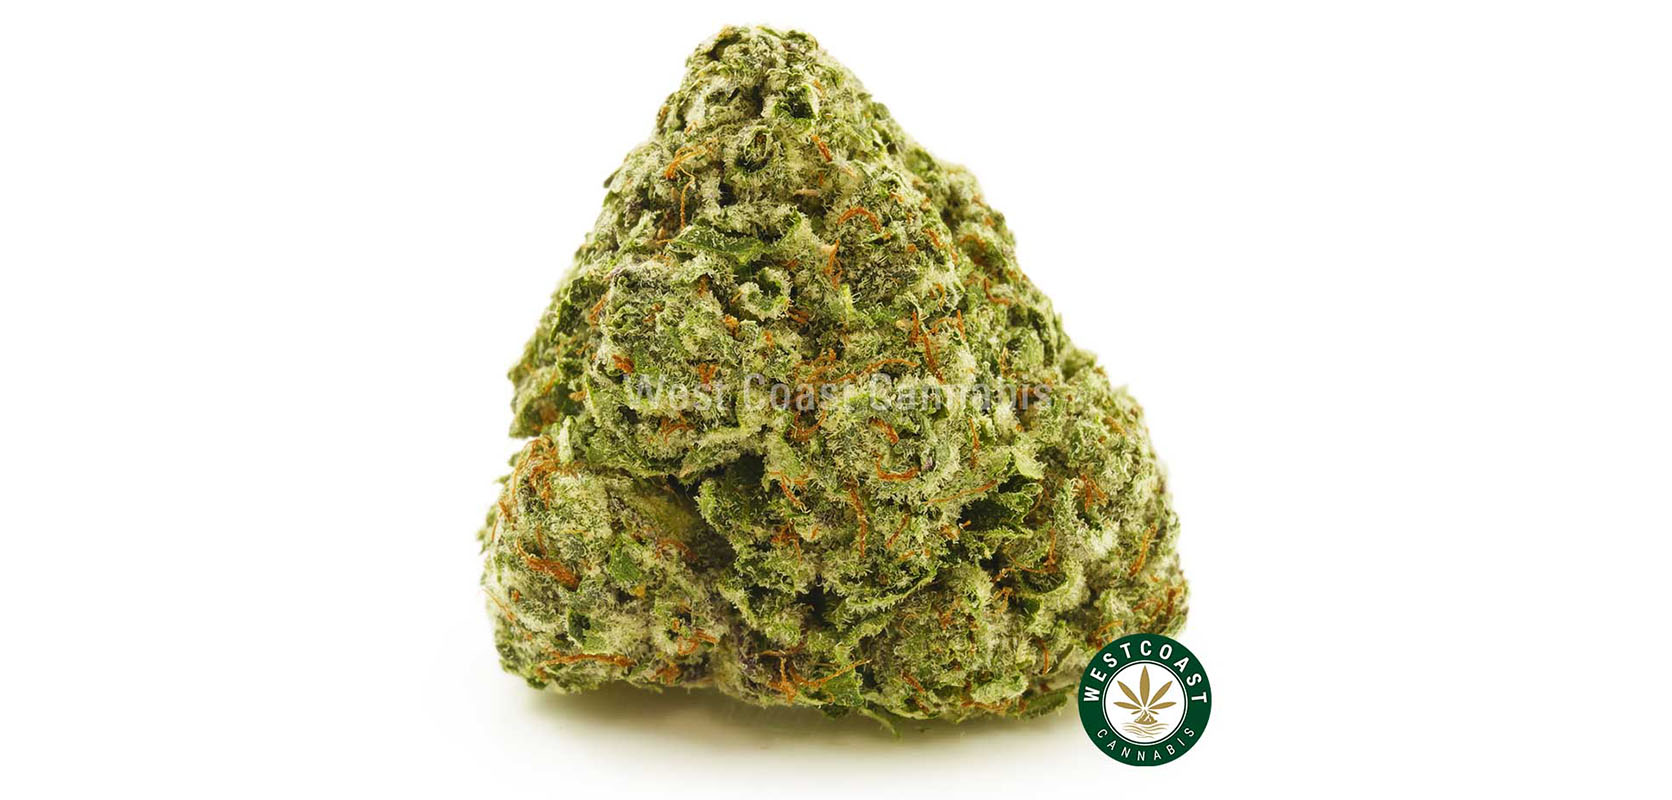 Image of wedding cake weed strain nugget to buy online in canada. mail order marijuana west coast cannabis.